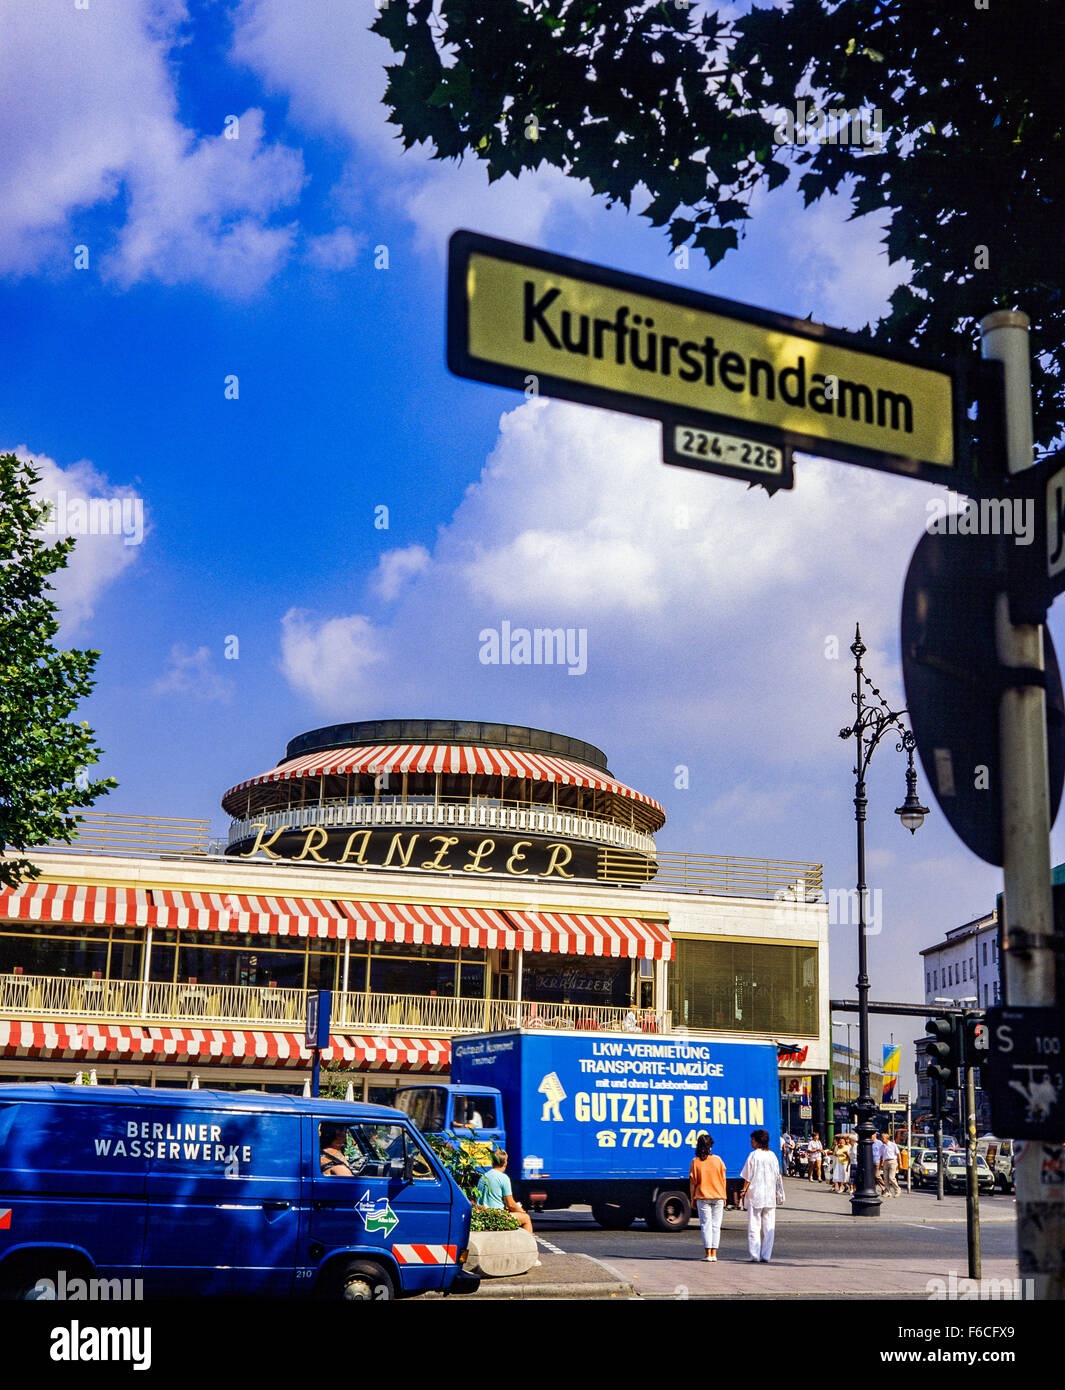 August 1986, Blue lorries in front of Cafe Kranzler and street sign on Kurfürstendamm avenue, Berlin, Germany, Europe Stock Photo